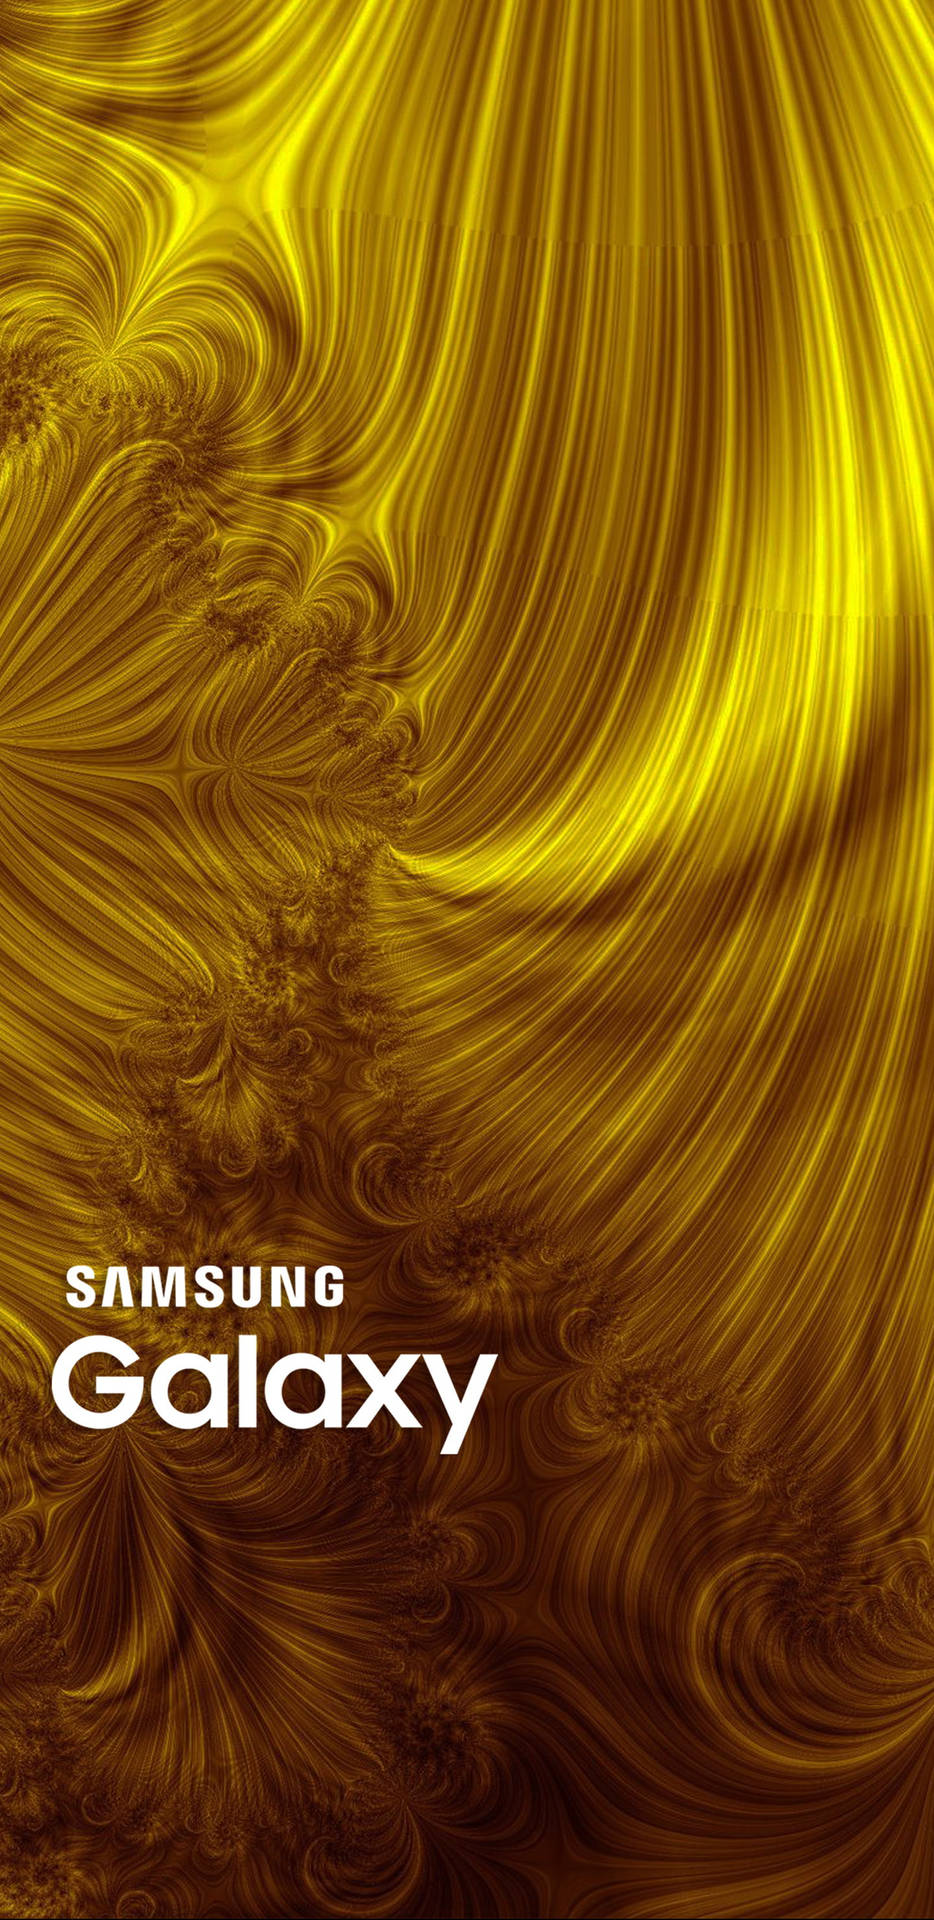 Samsung Galaxy Abstract Gold Fractal